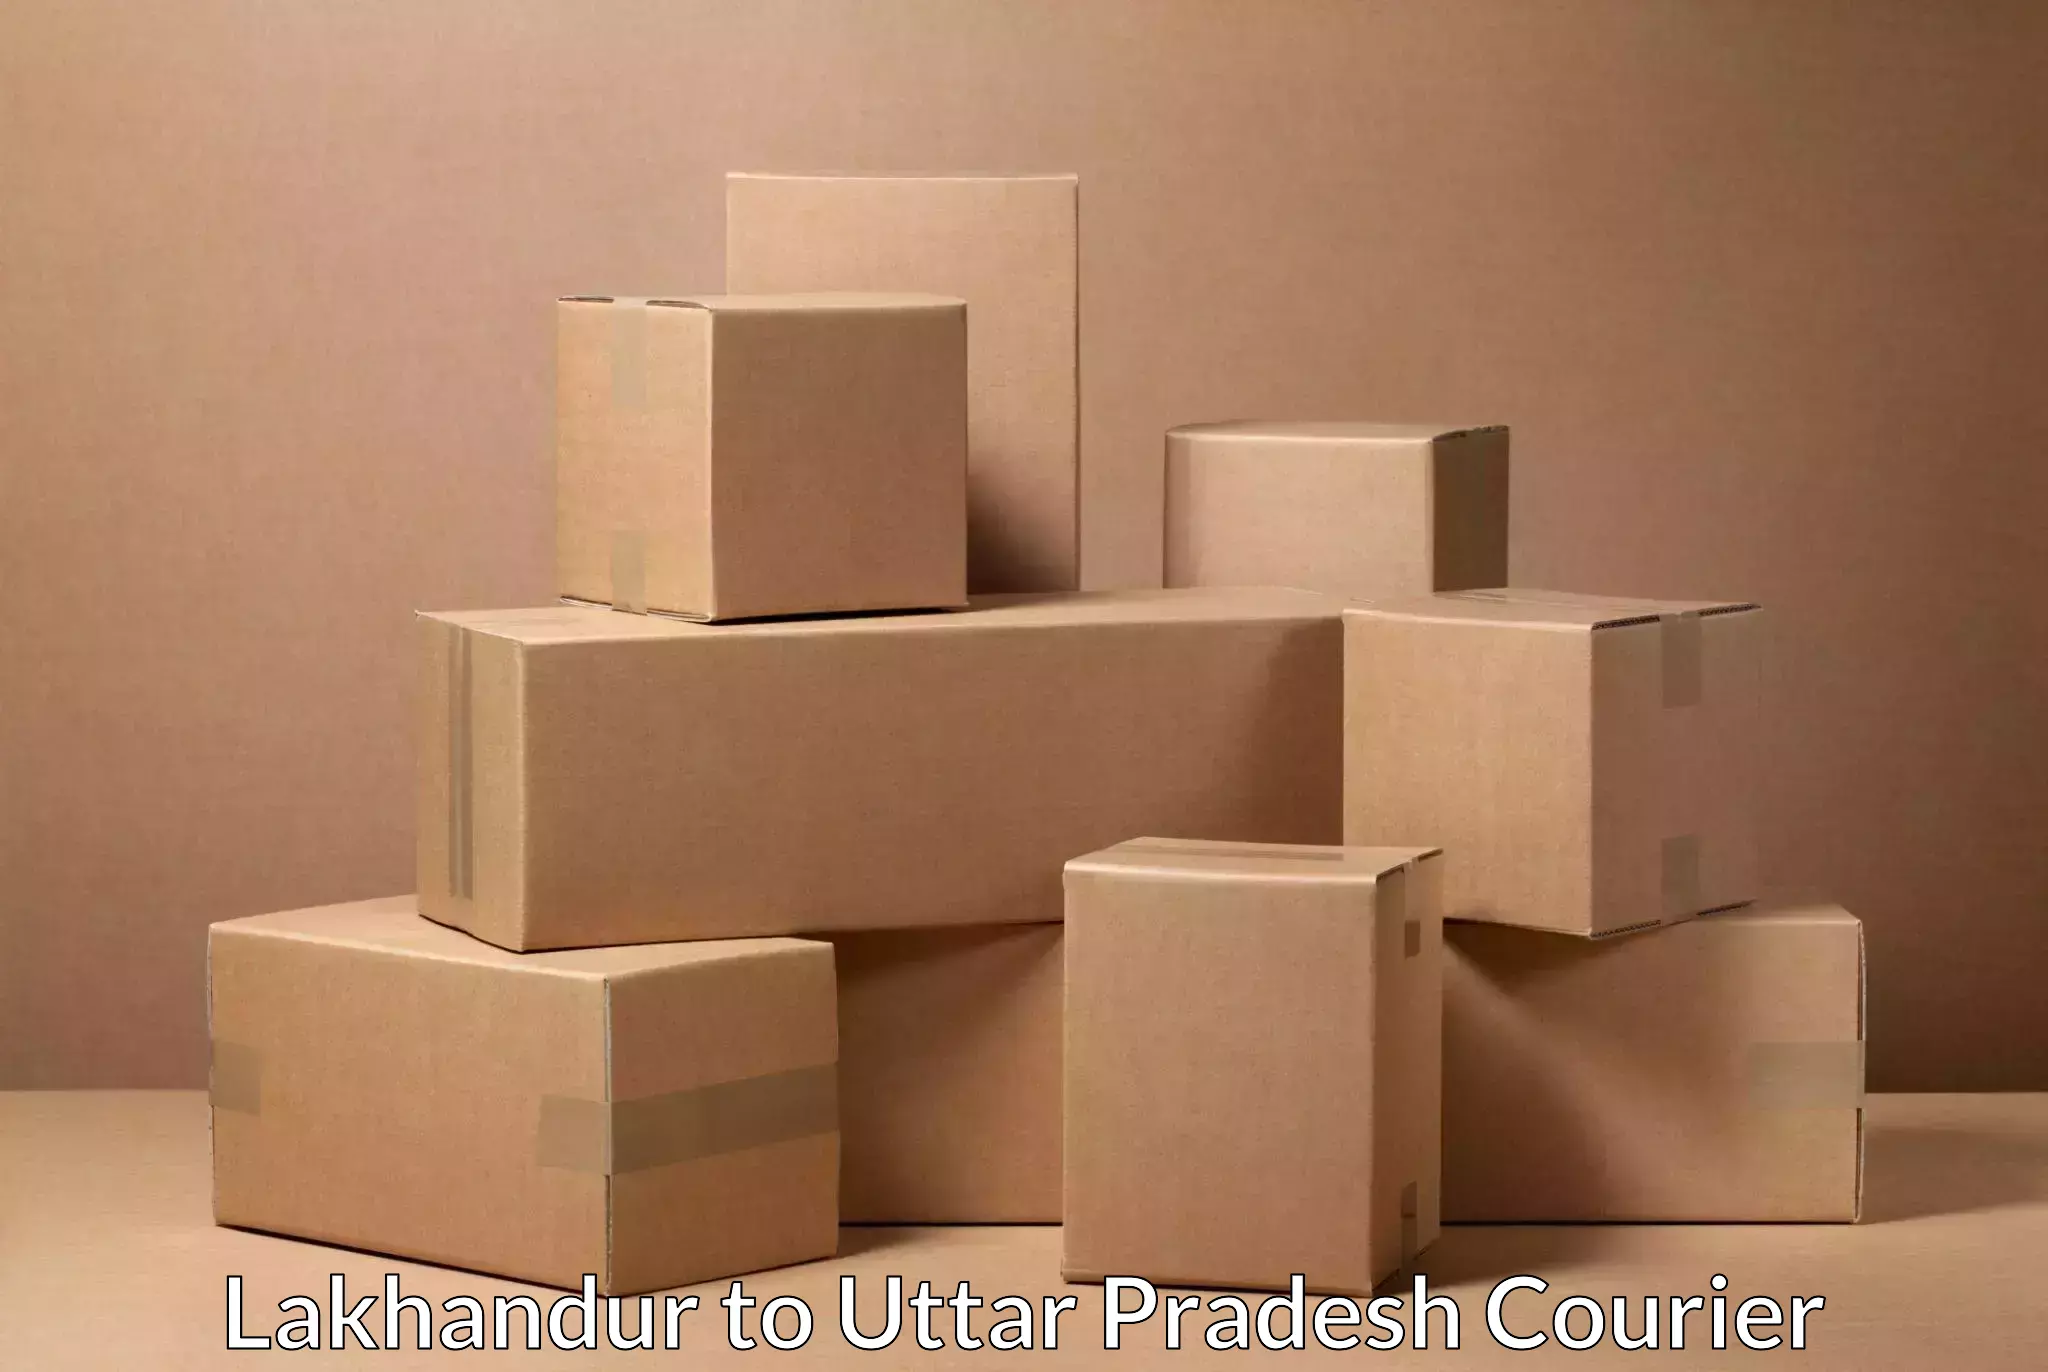 Customized delivery solutions Lakhandur to Uttar Pradesh